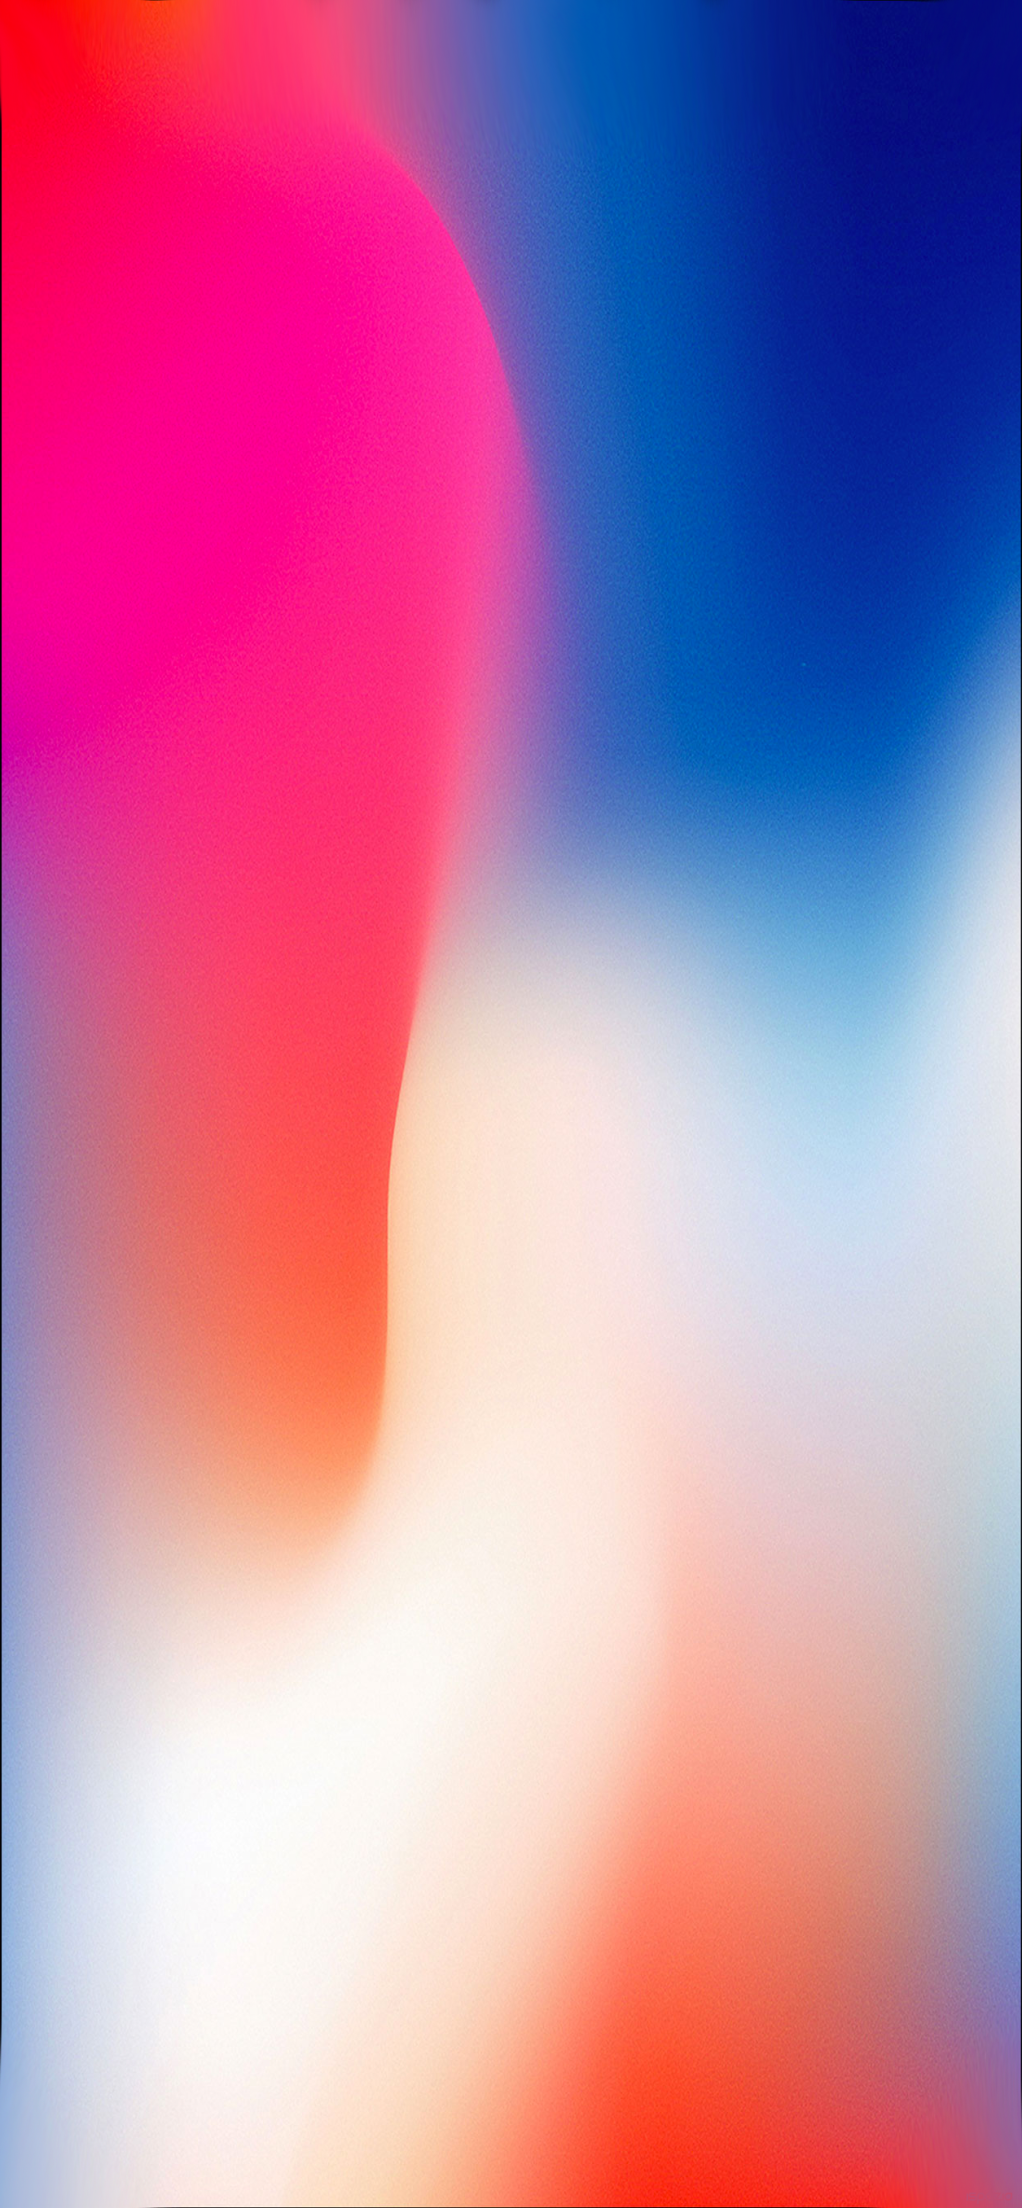 Apple wallpaper iphone.com